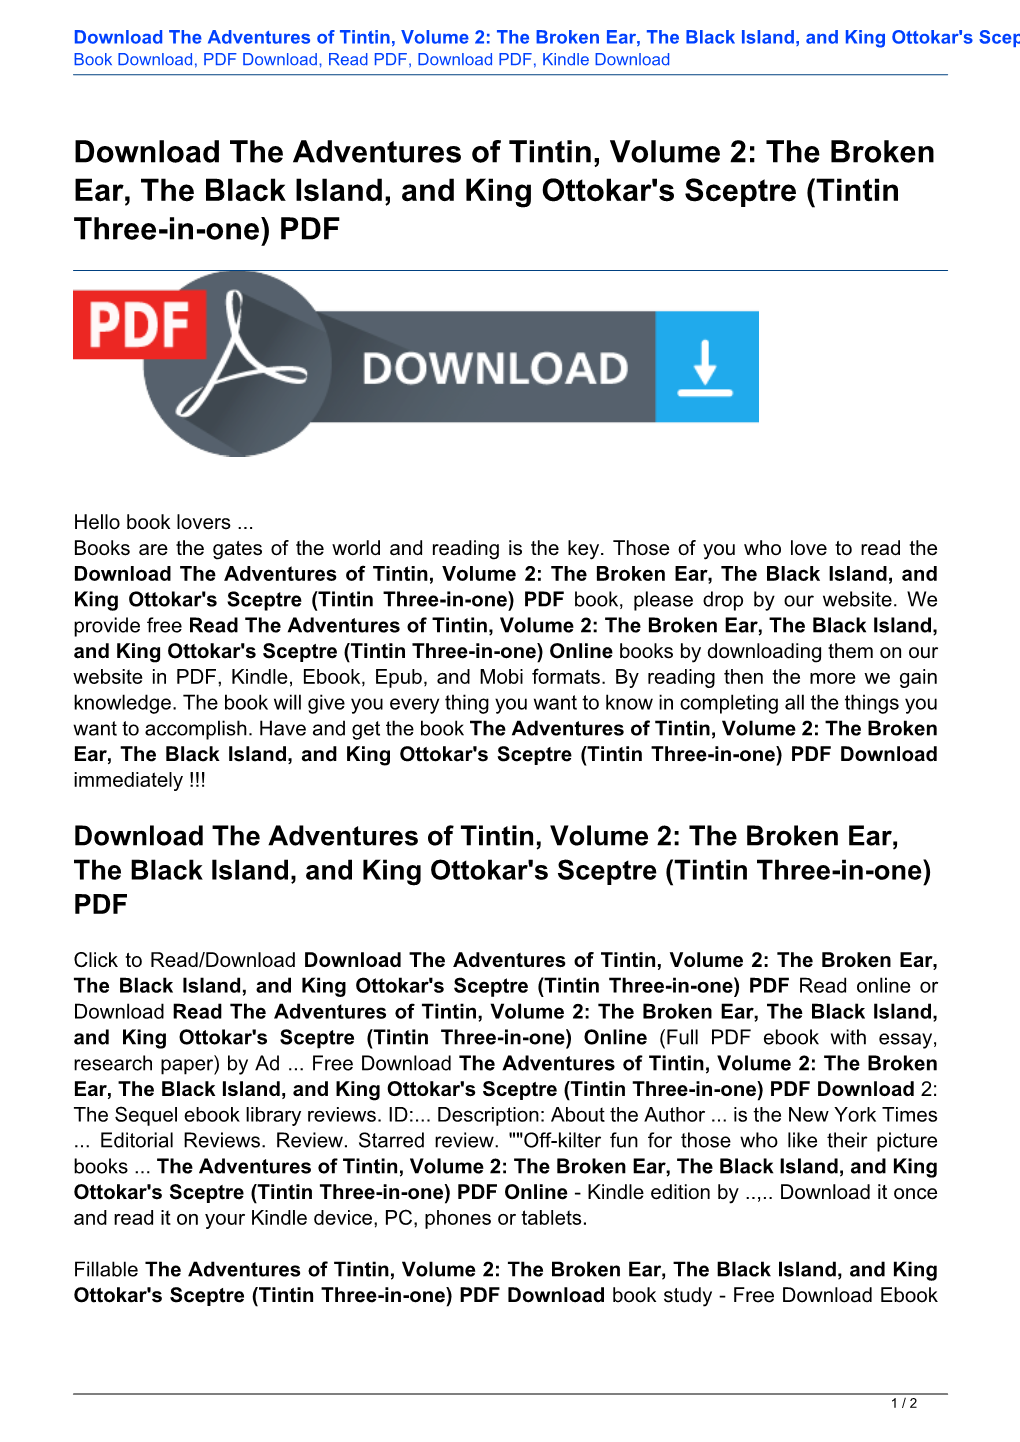 The Broken Ear, the Black Island, and King Ottokar's Sceptre (Tintin Three-In-One) PDF Book Download, PDF Download, Read PDF, Download PDF, Kindle Download